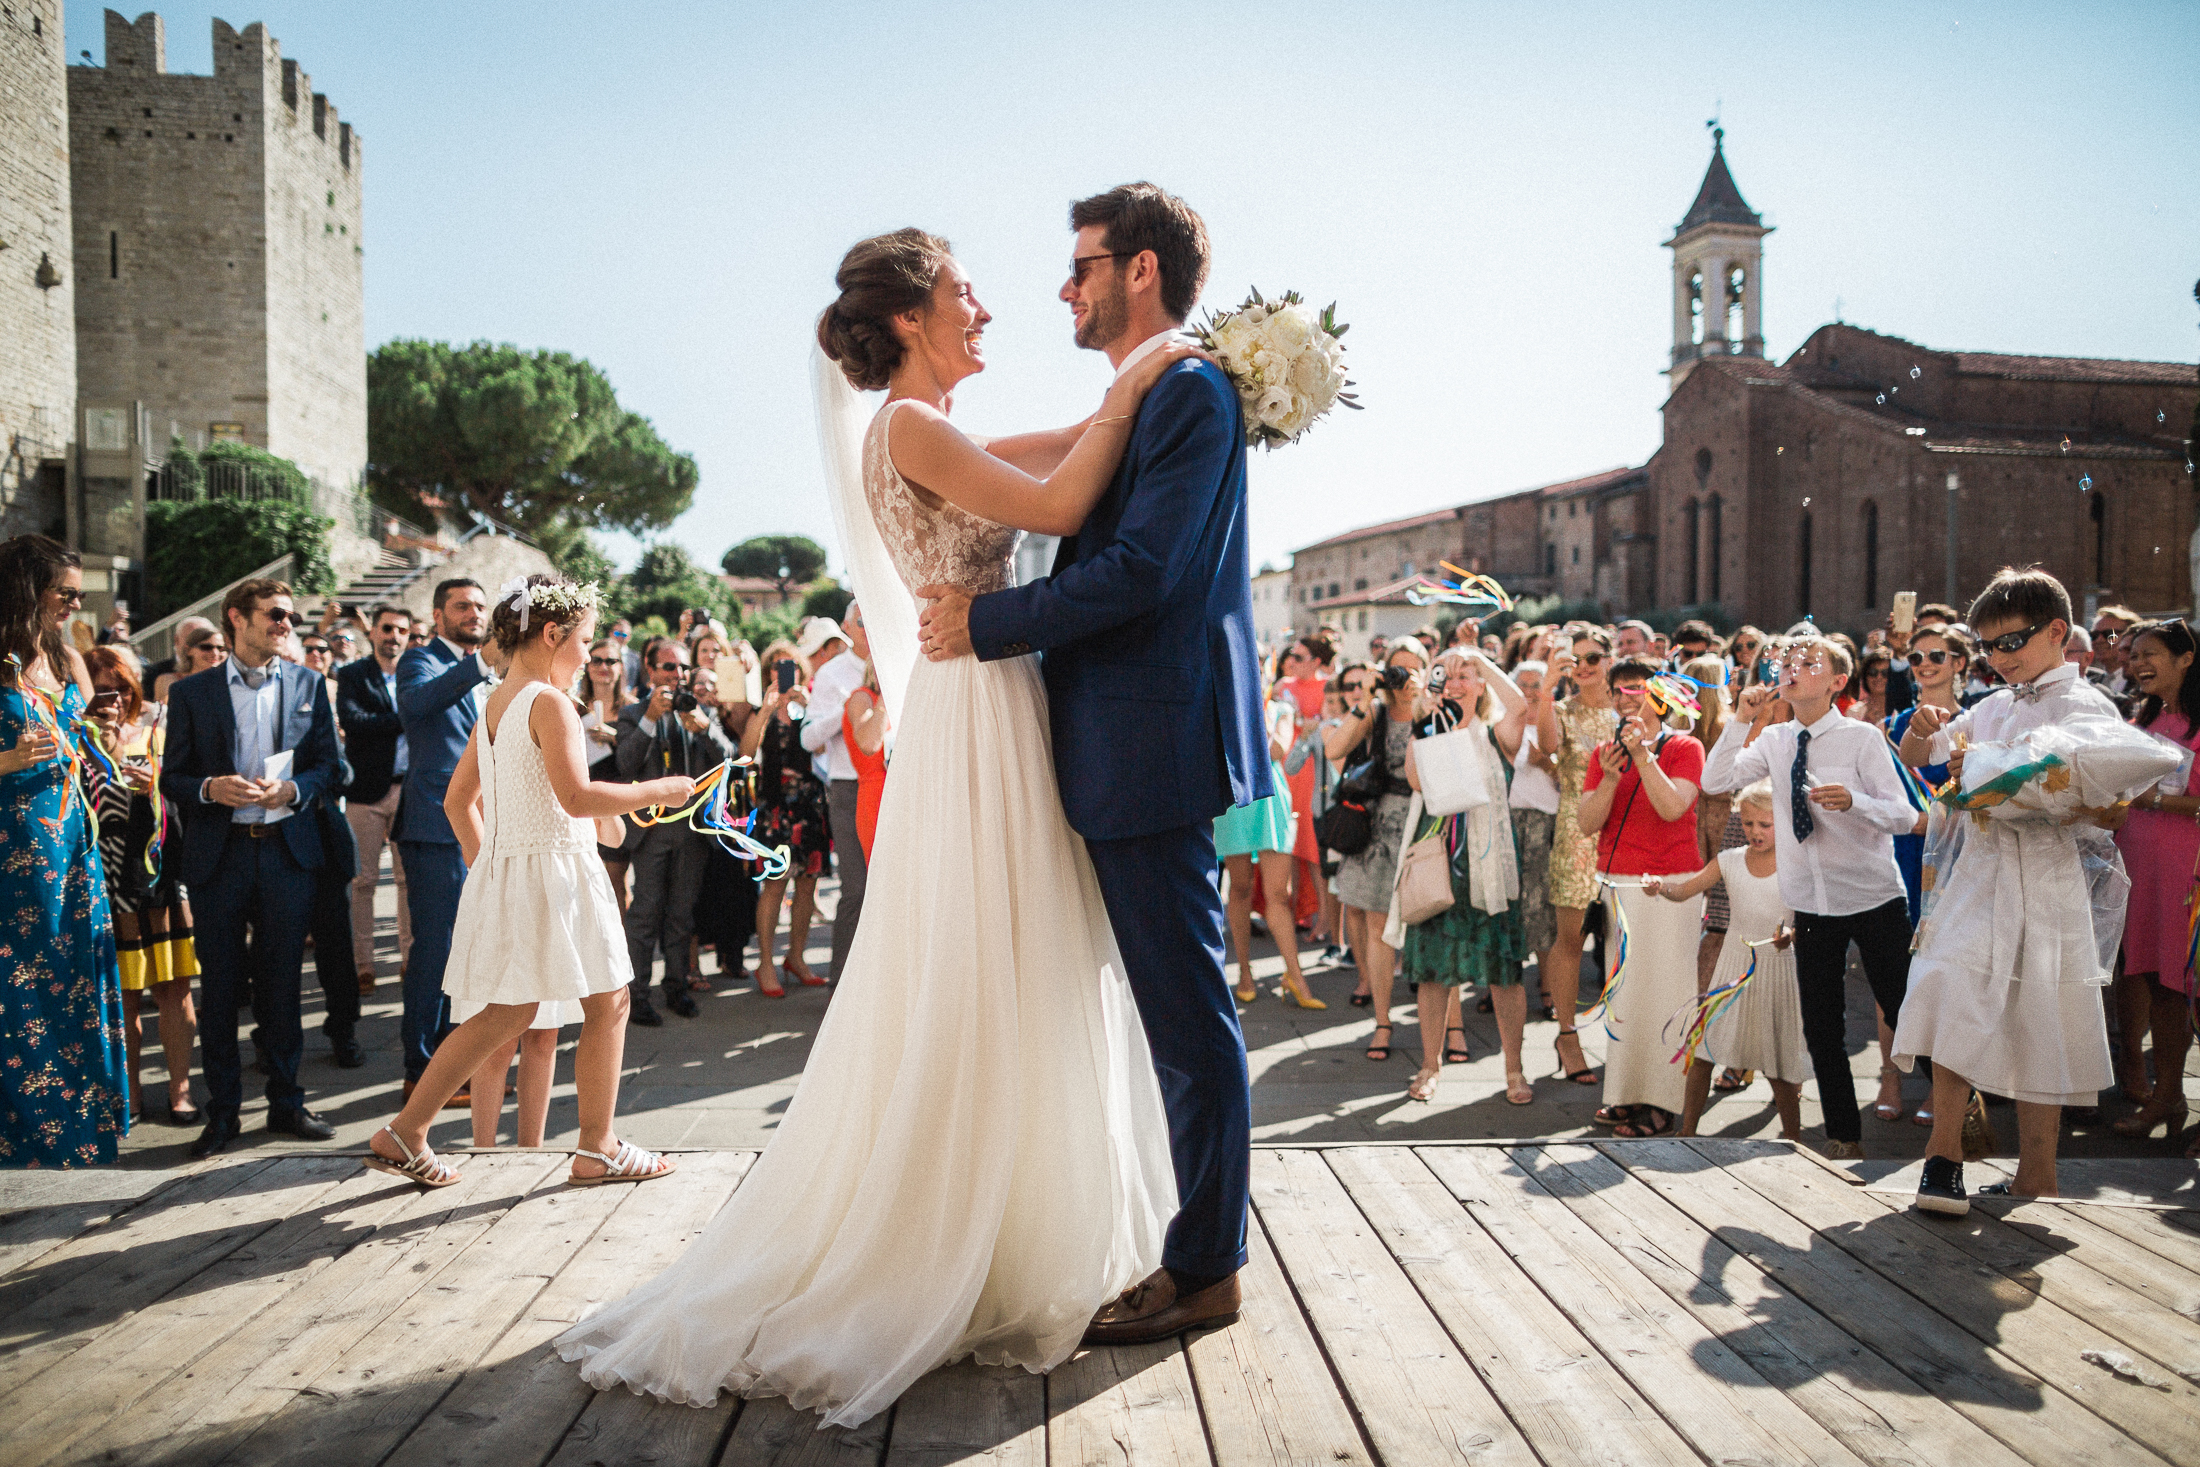 Tuscany wedding photographer Sylvain Bouzat.